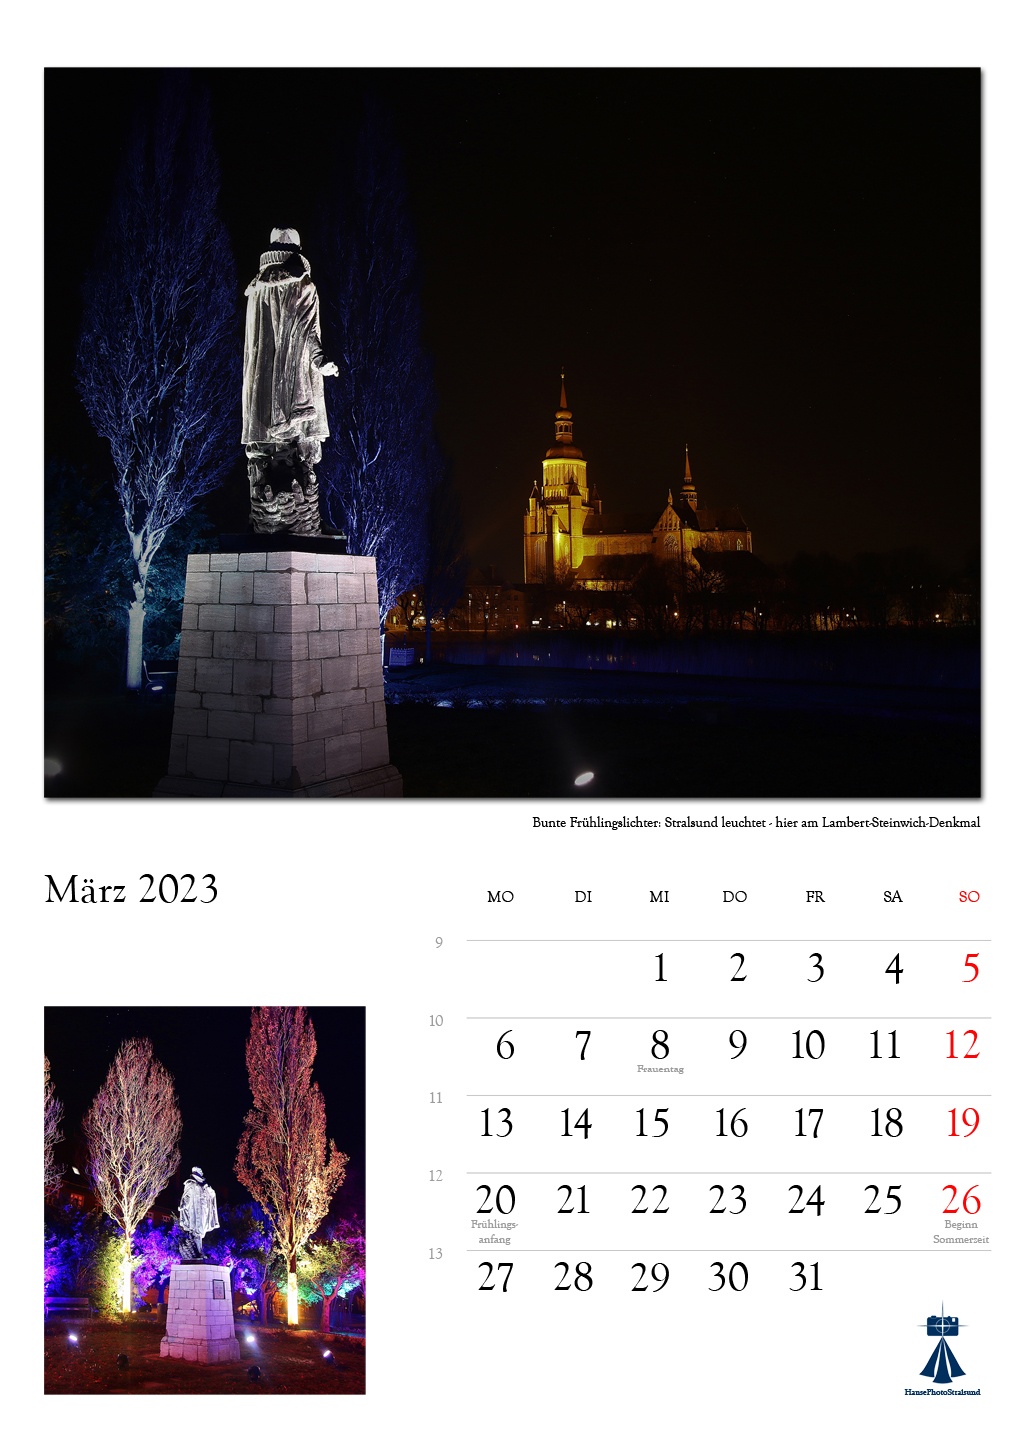 Frühlingslichter: Stralsund leuchtet – hier am Lambert-Steinwich-Denkmal